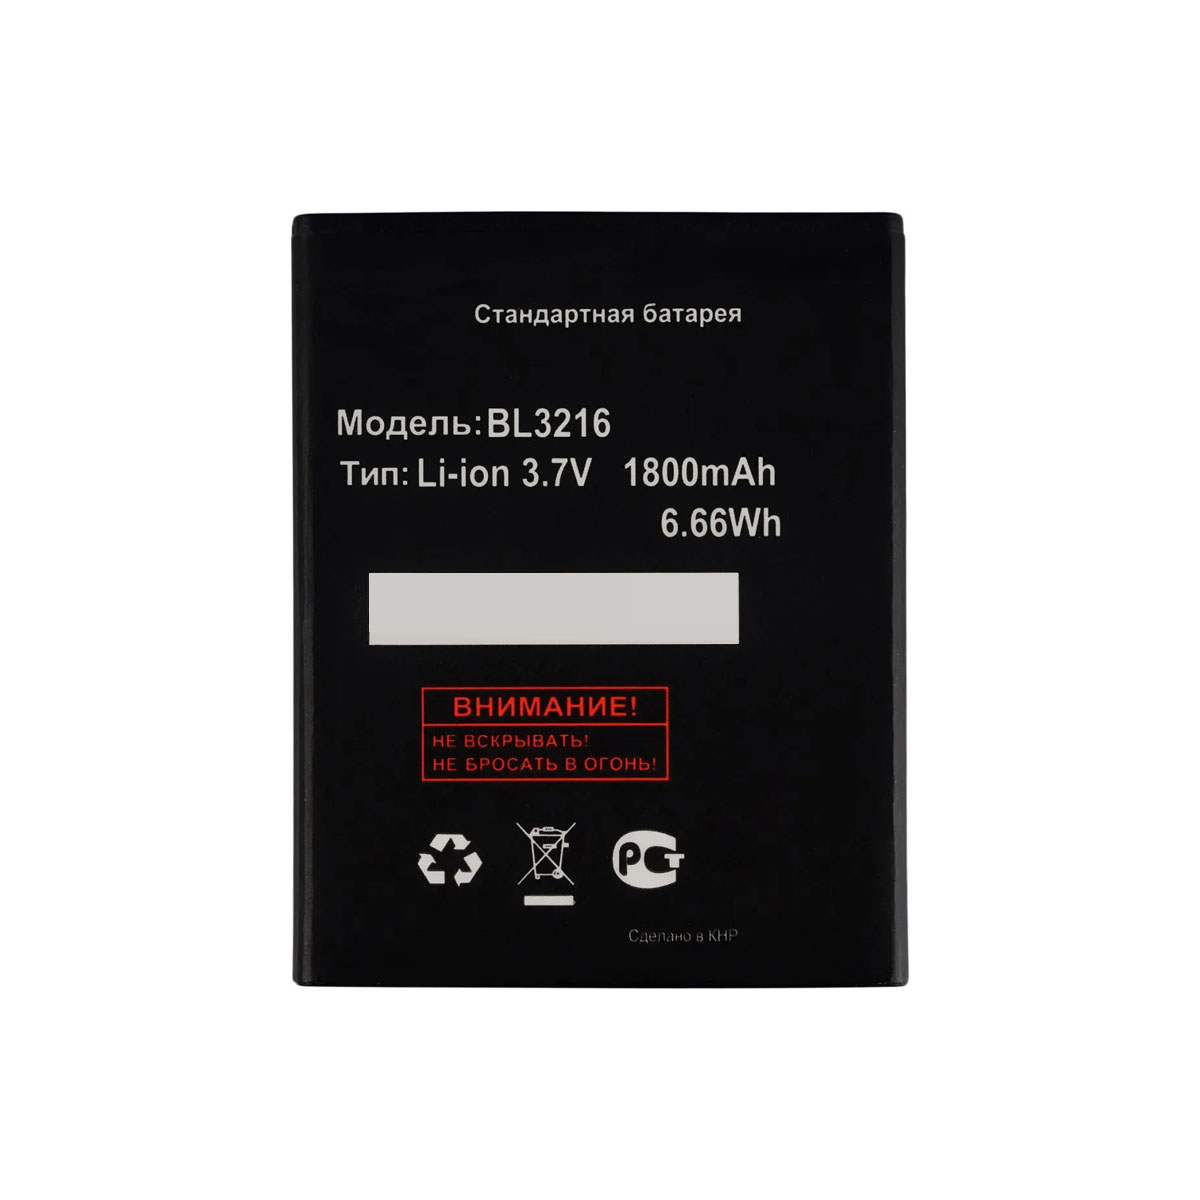 АКБ (Аккумулятор) BL3216 для Fly IQ4414 Quad EVO Tech 3, 1800 mAh, 6.66Wh, цвет черный